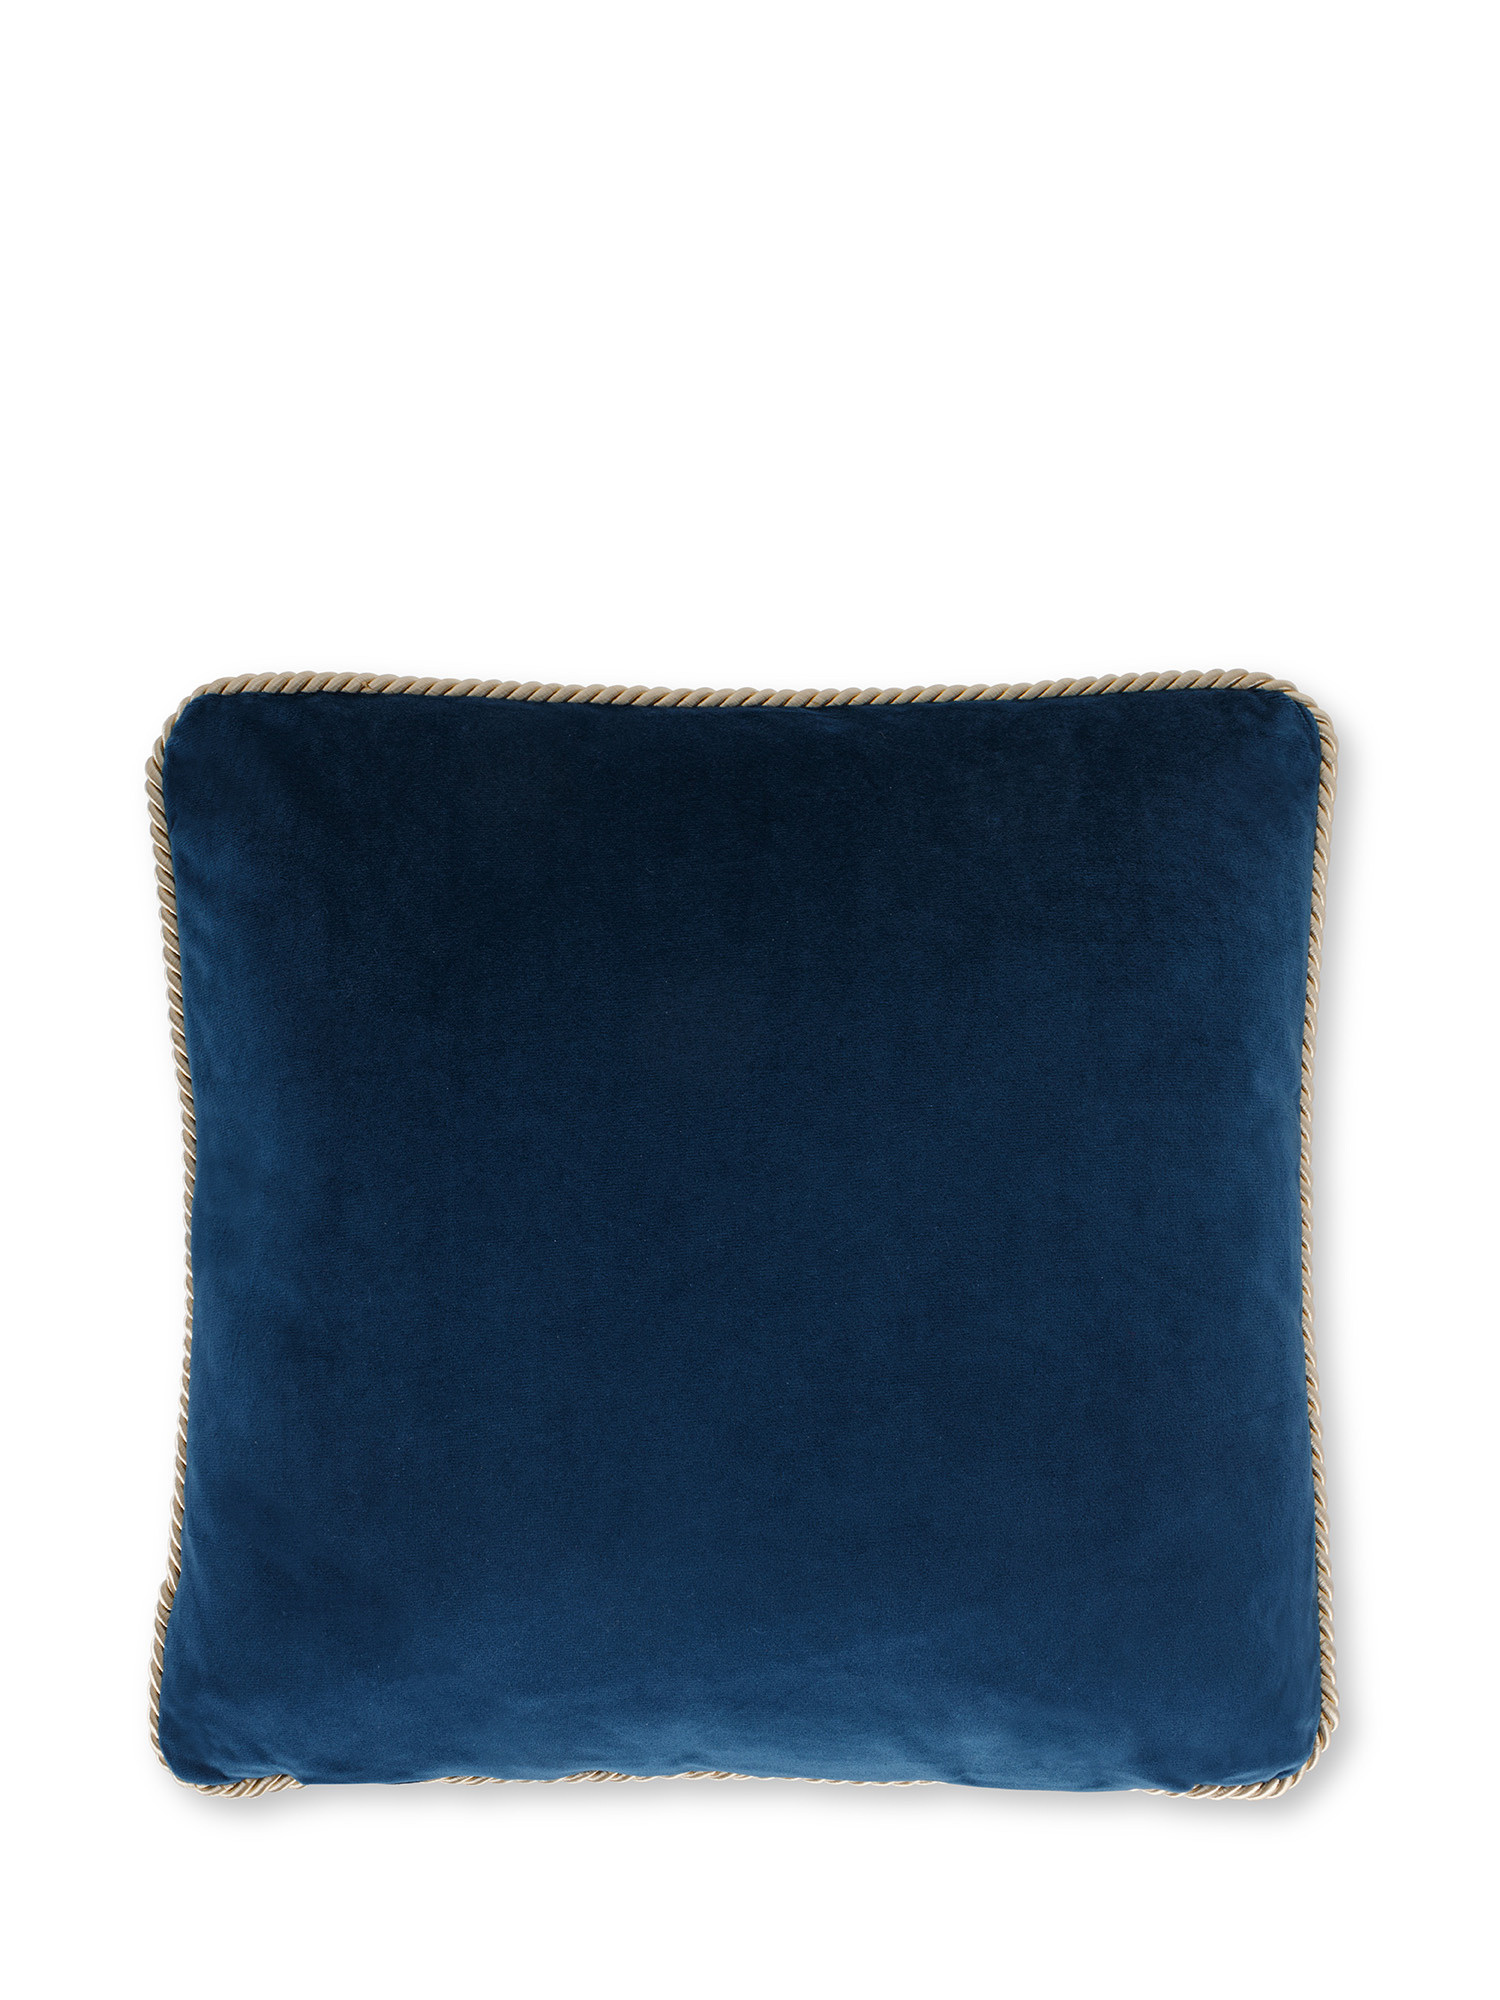 Cuscino in velluto bicolore 45x45 cm, Blu, large image number 1